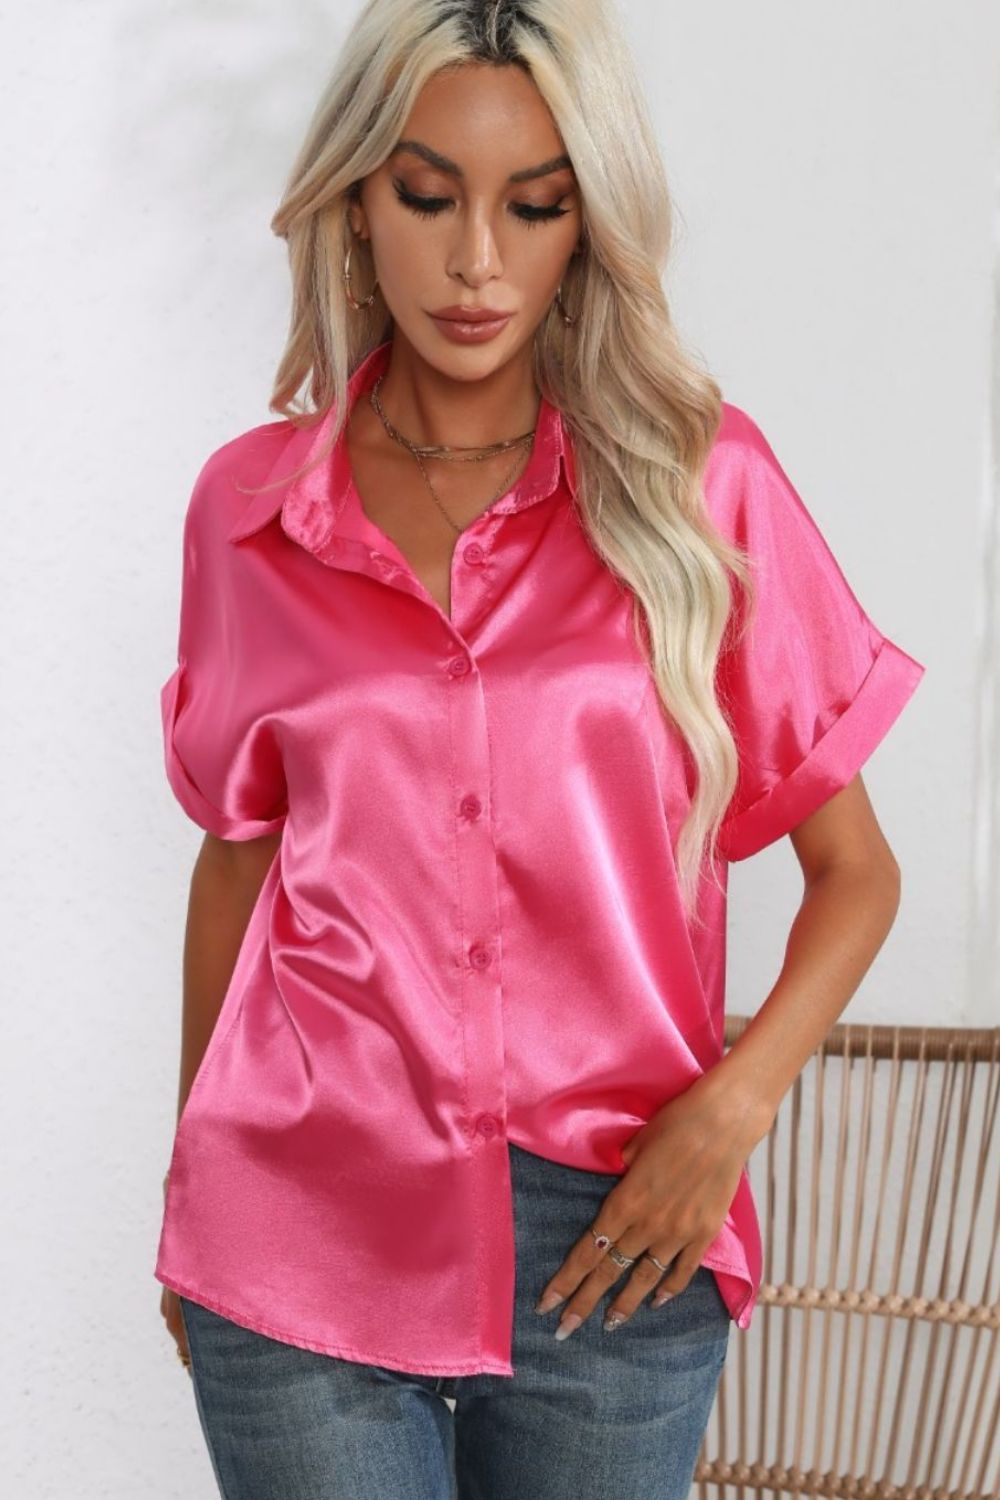 Collared Neck Short Sleeve Shirt Hot Pink